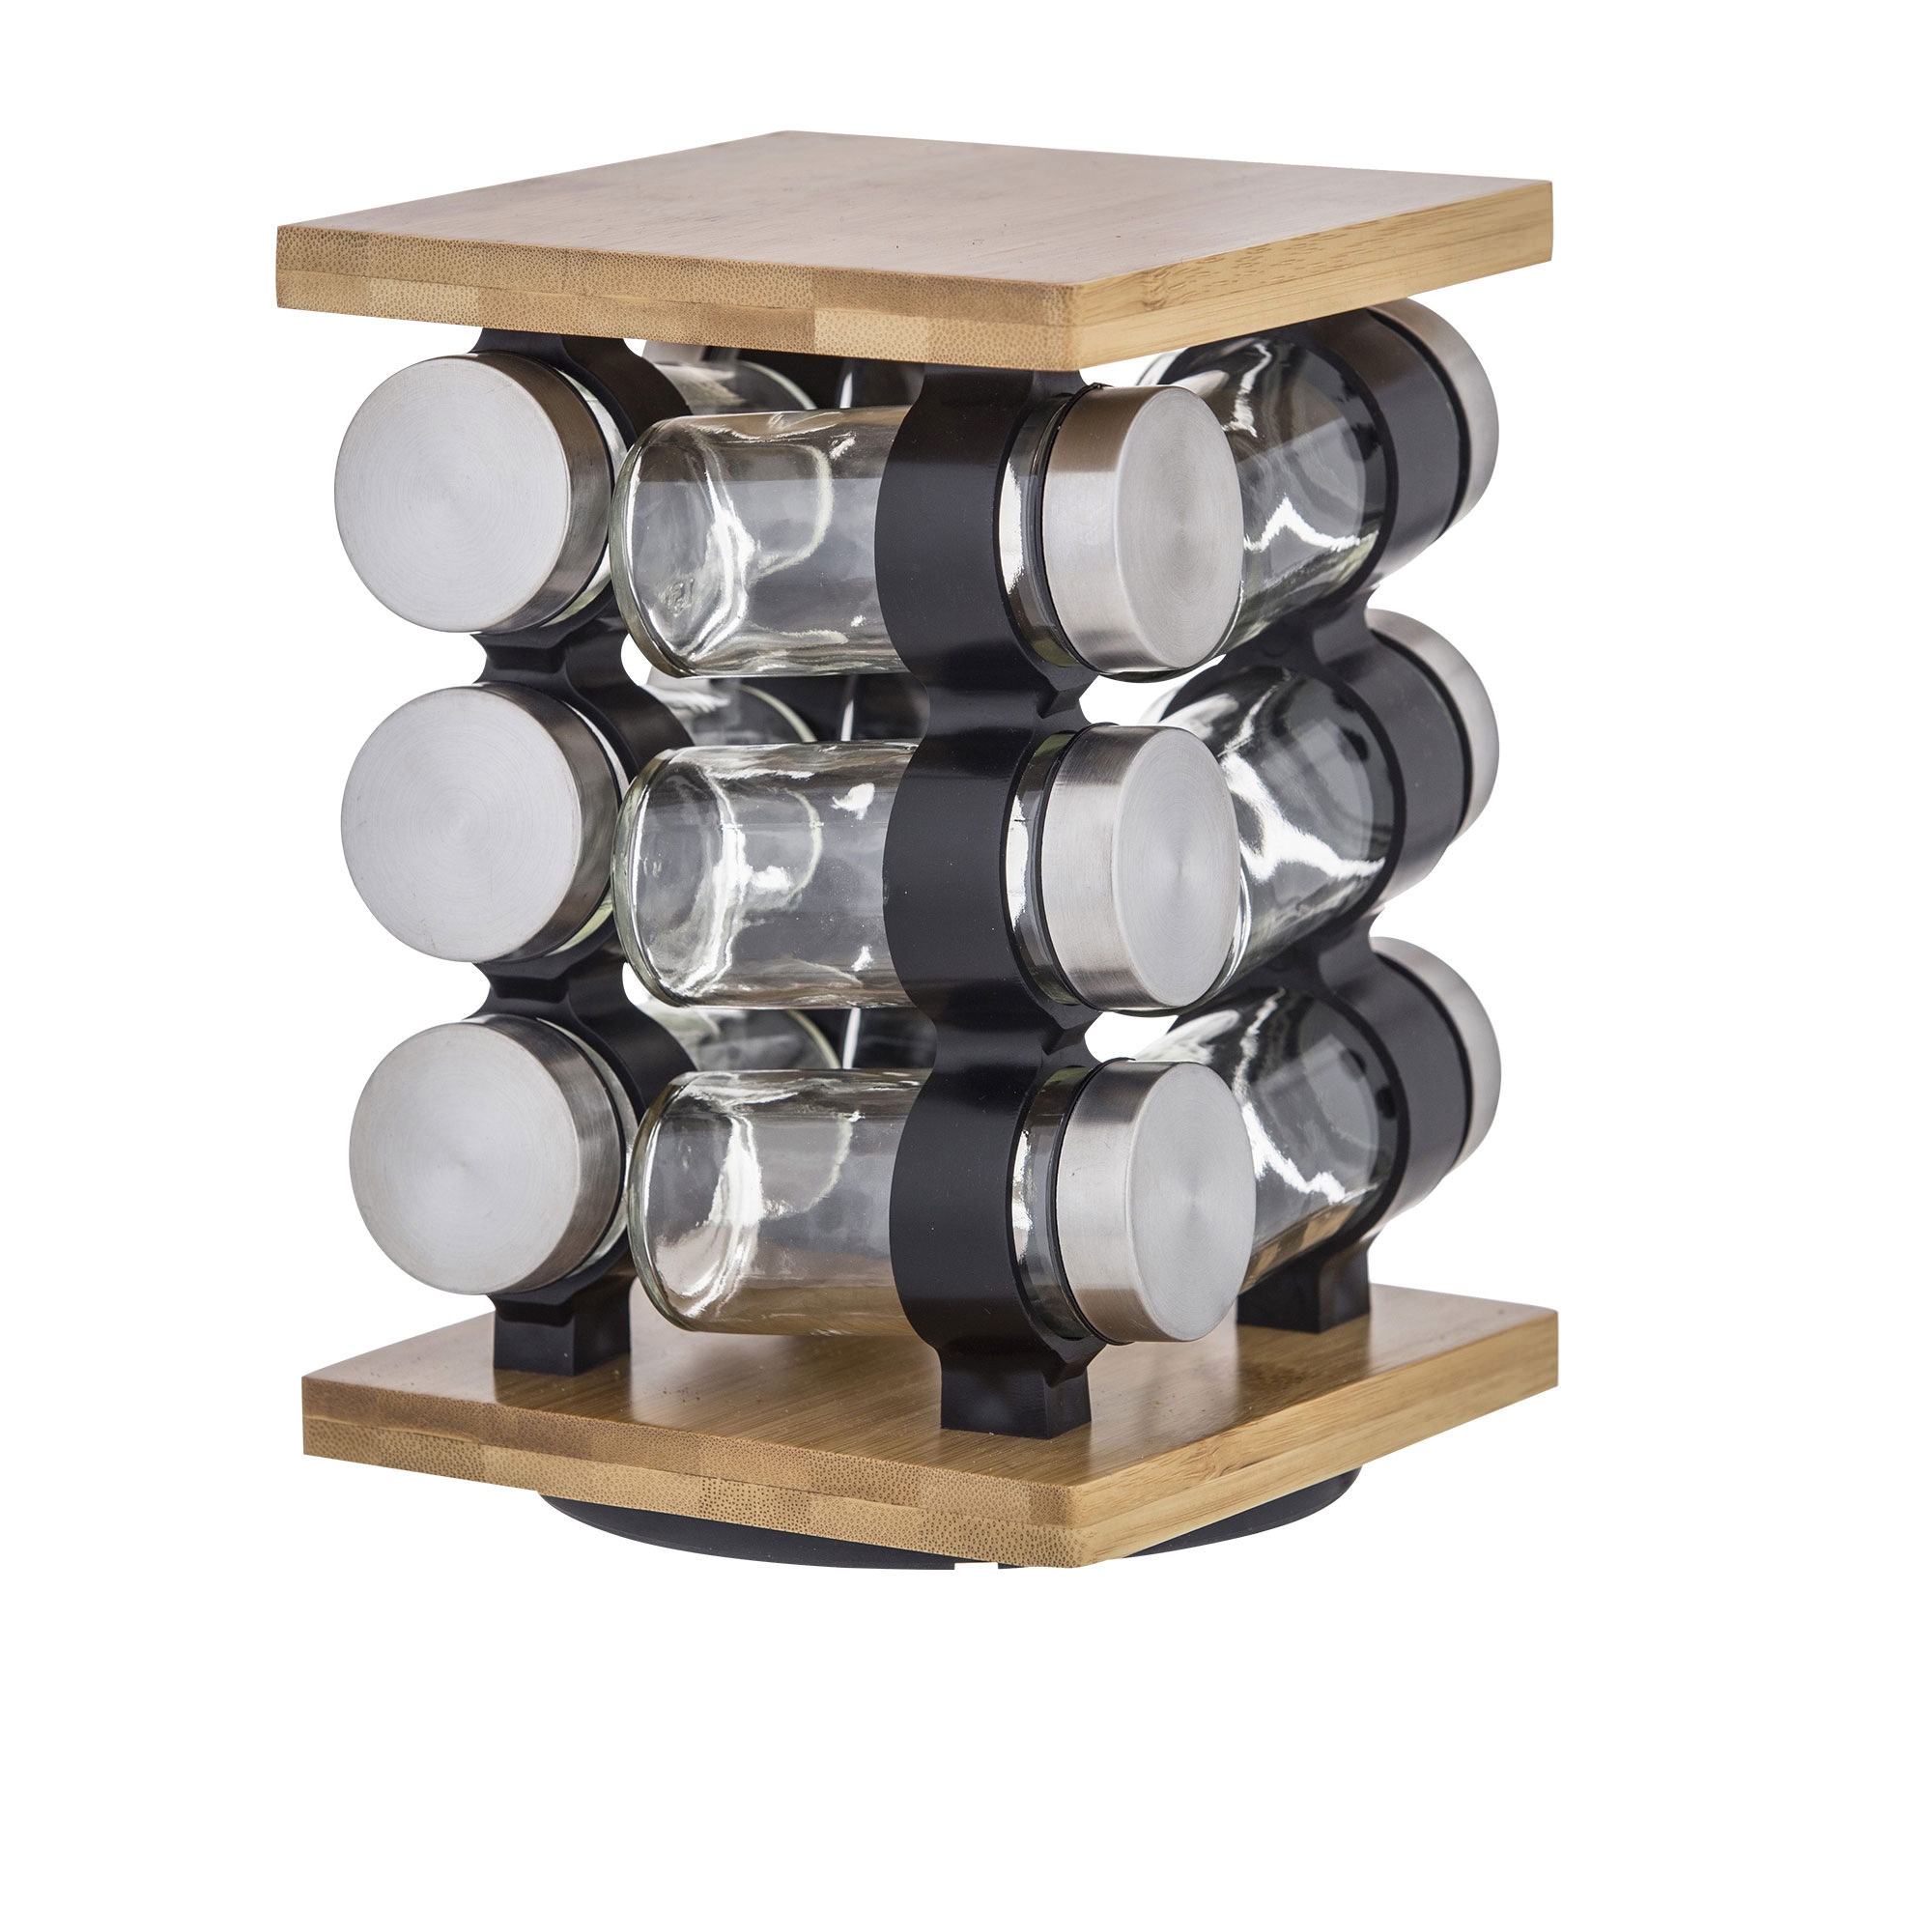 Davis & Waddell Romano Spice Rack Jar Set of 12 Image 1